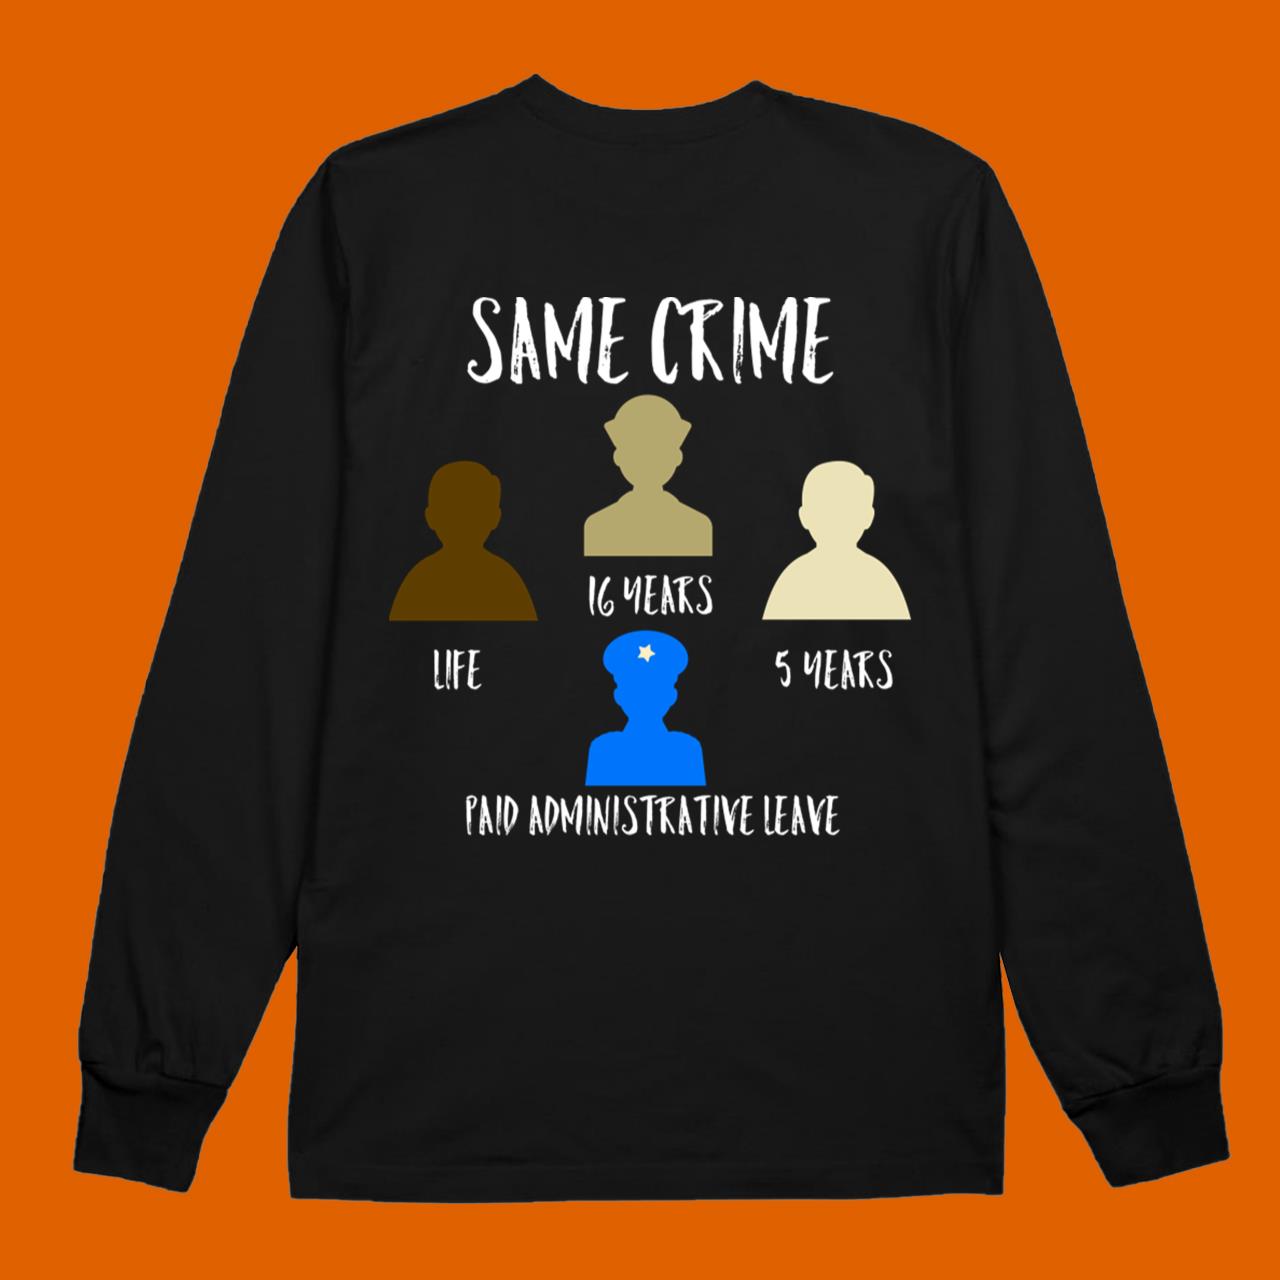 Same crime Paid Administrative Leave T-Shirt